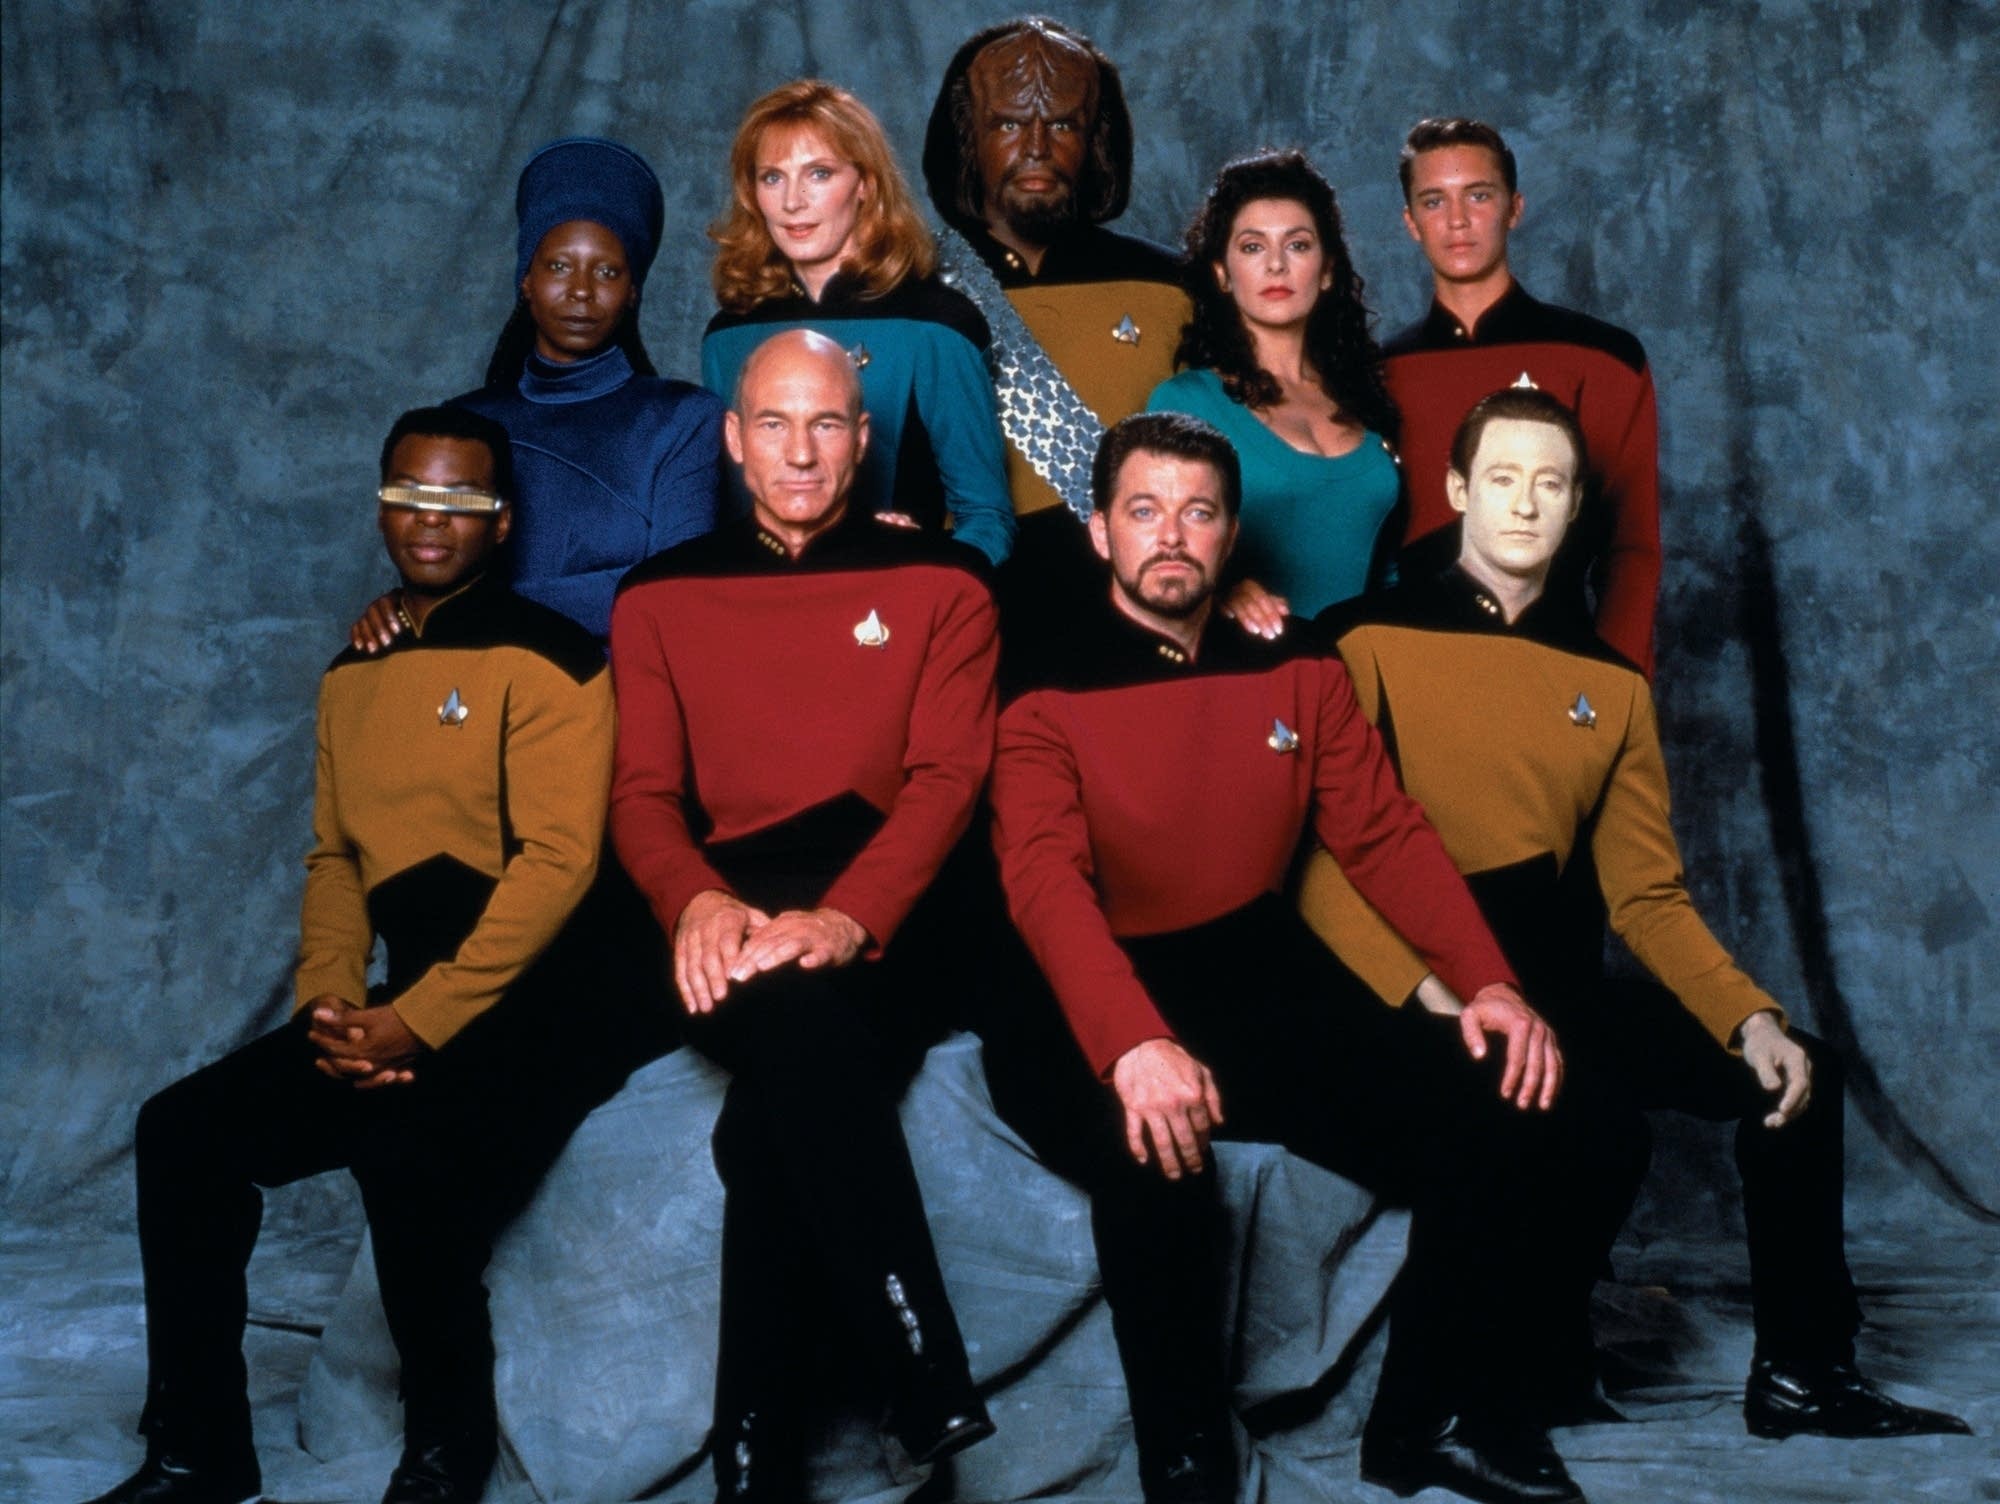 Star Trek: The Next Generation Backgrounds on Wallpapers Vista